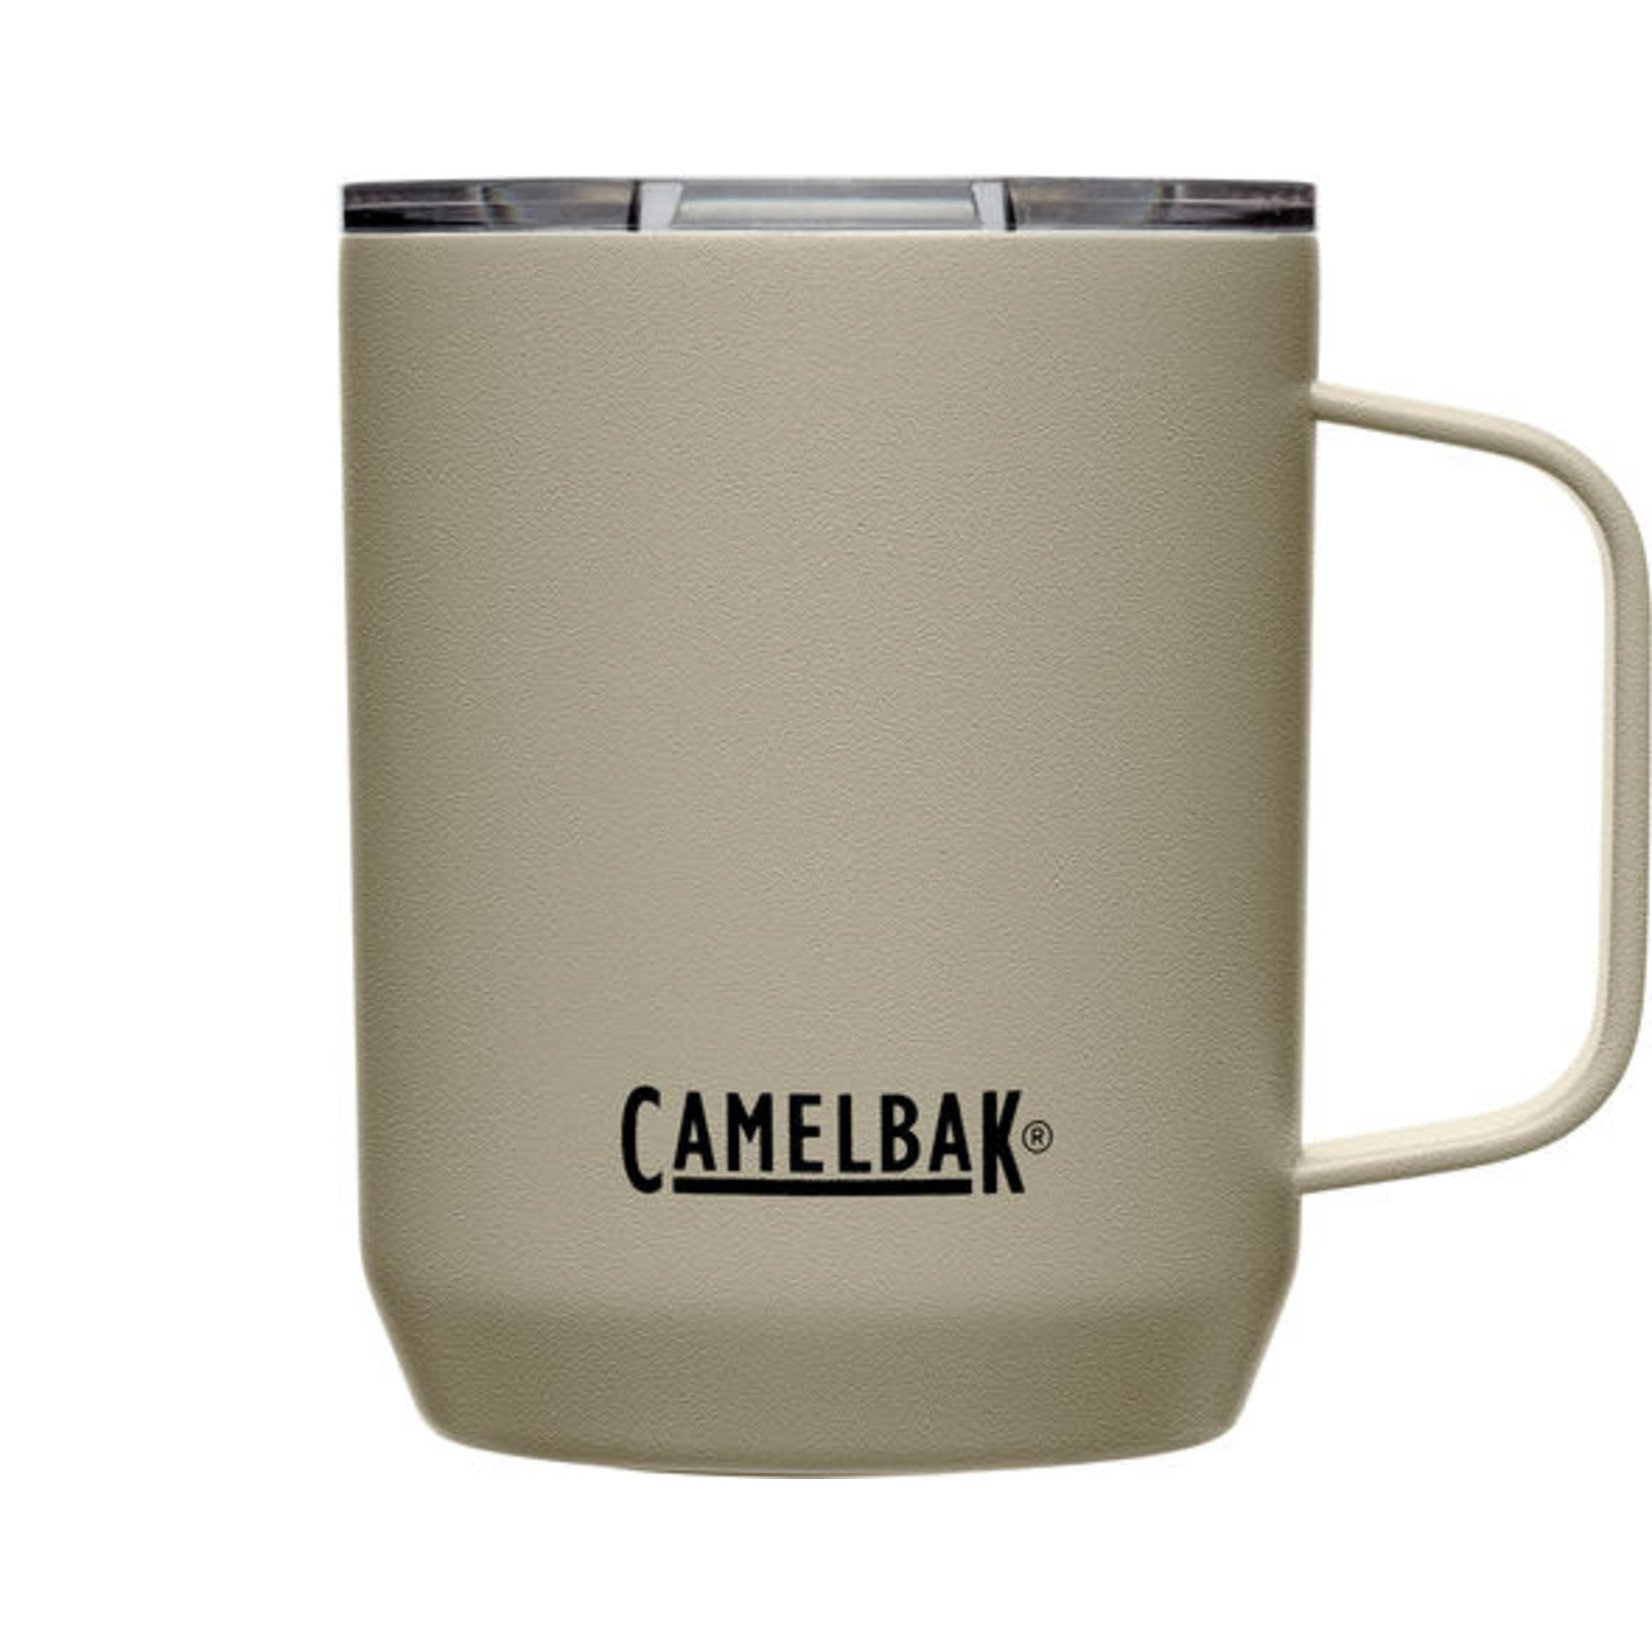 Camelbak Horizon Vacuum Insulated Stainless Steel Camp Mug - 12 oz. - White